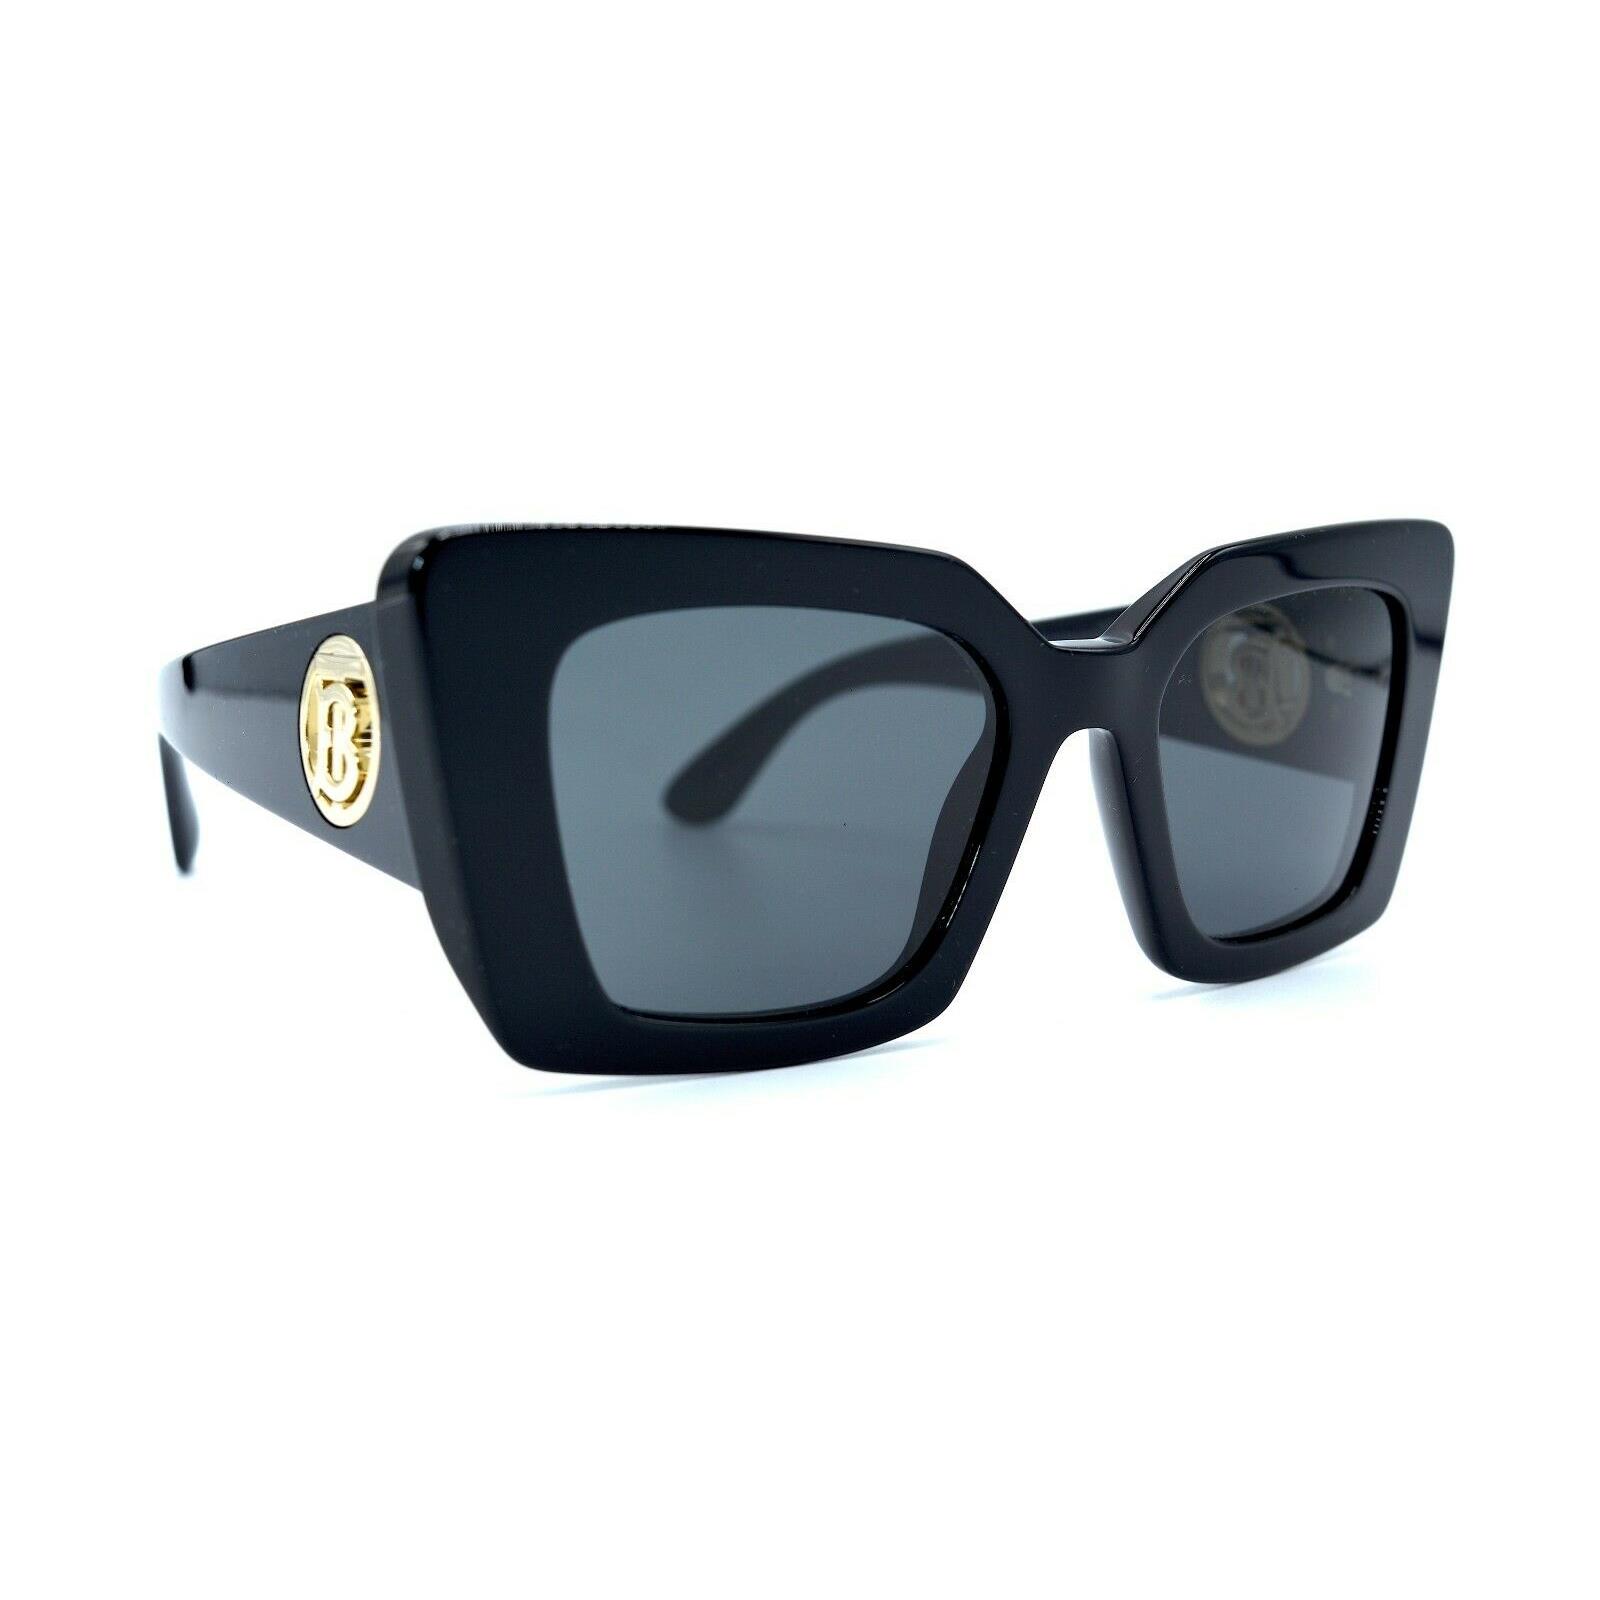 Burberry Be4344 300187 Black Dark Grey Sunglasses 51 20 8056597188089 Burberry Sunglasses